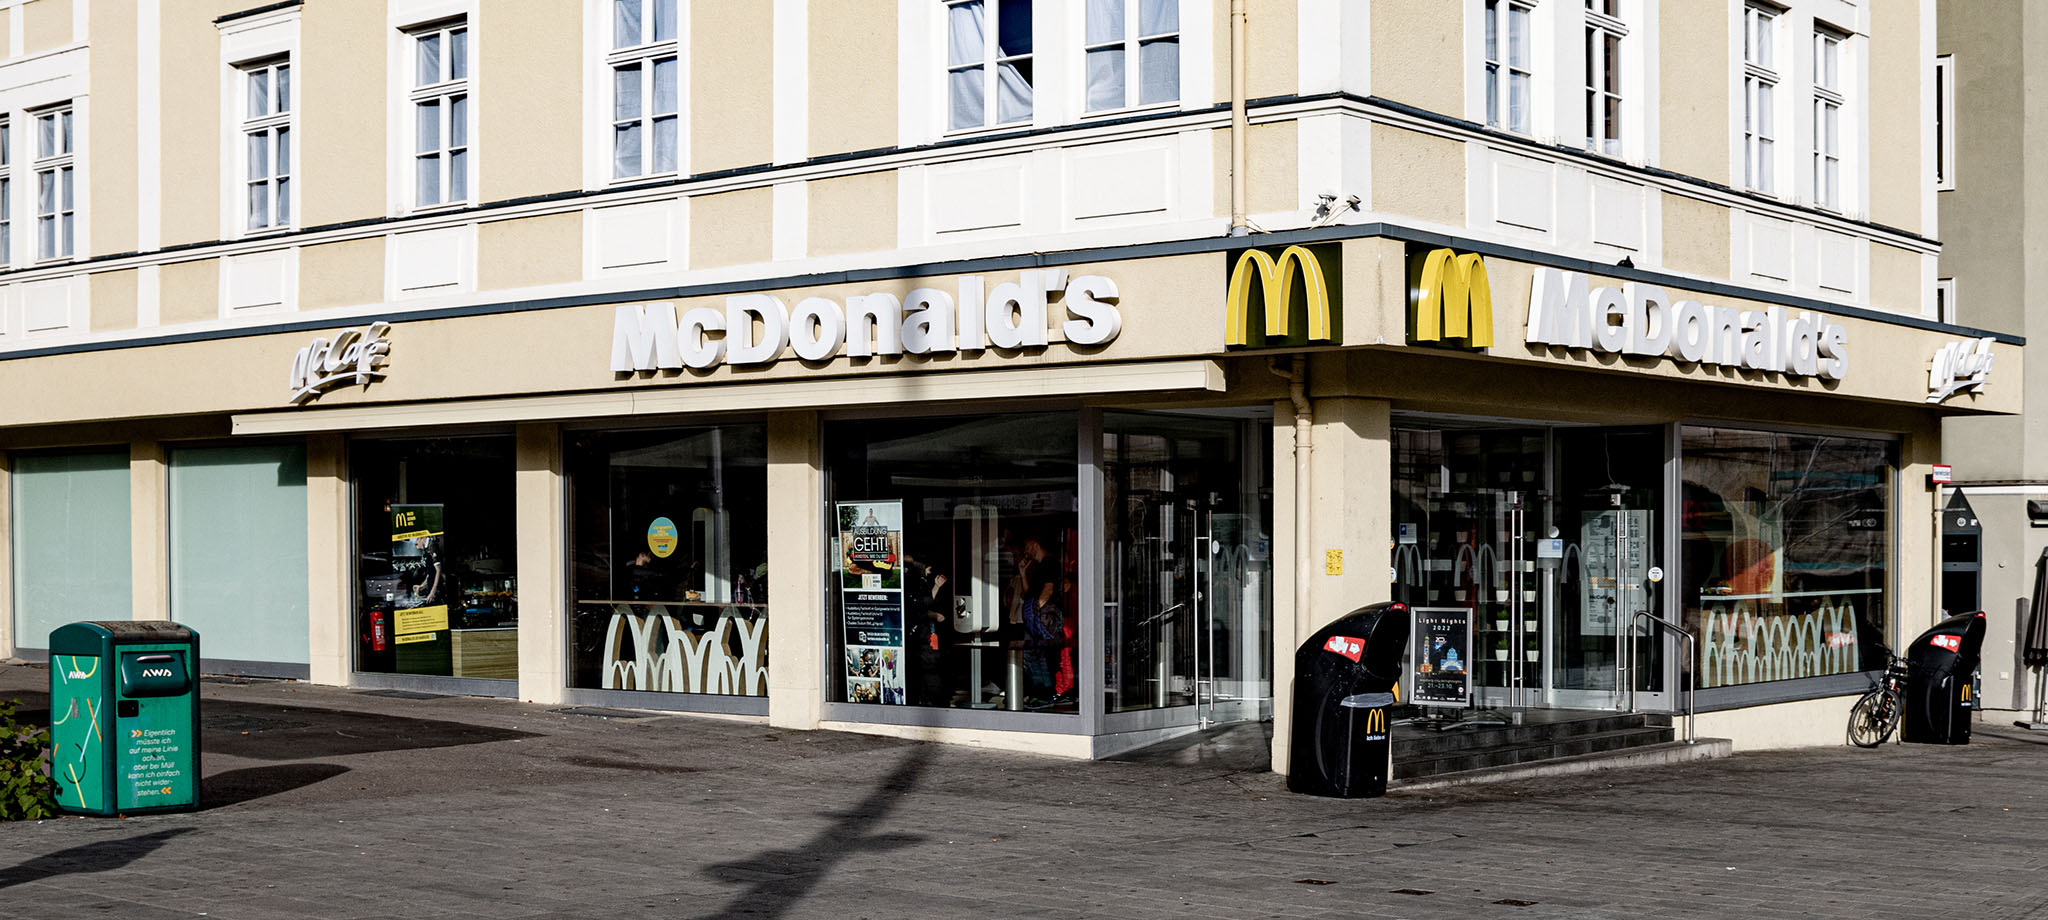 Das McDonald’s-Restaurant in Augsburg (Fuggerstraße)